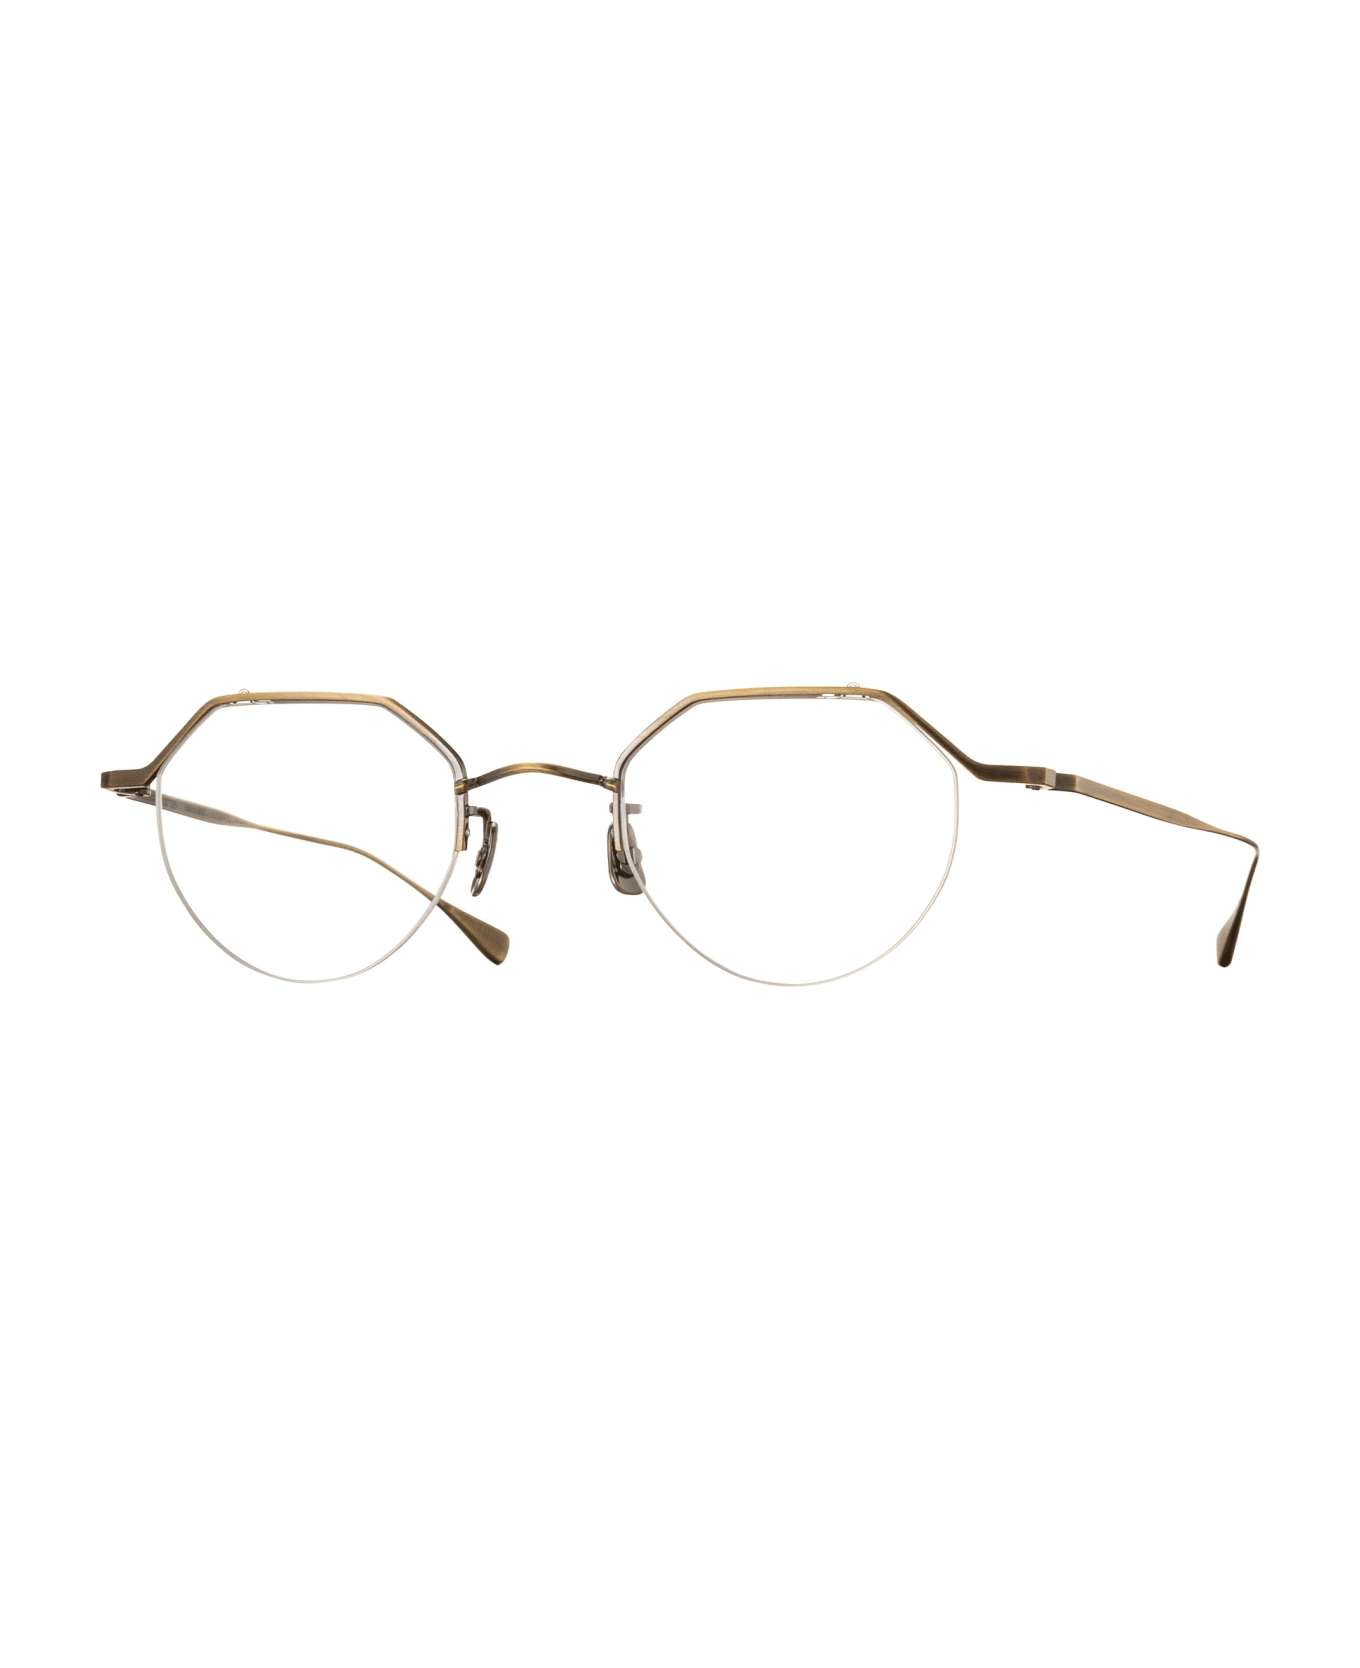 Eyevan 7285 185 - Antique Gold Rx Glasses - Gold